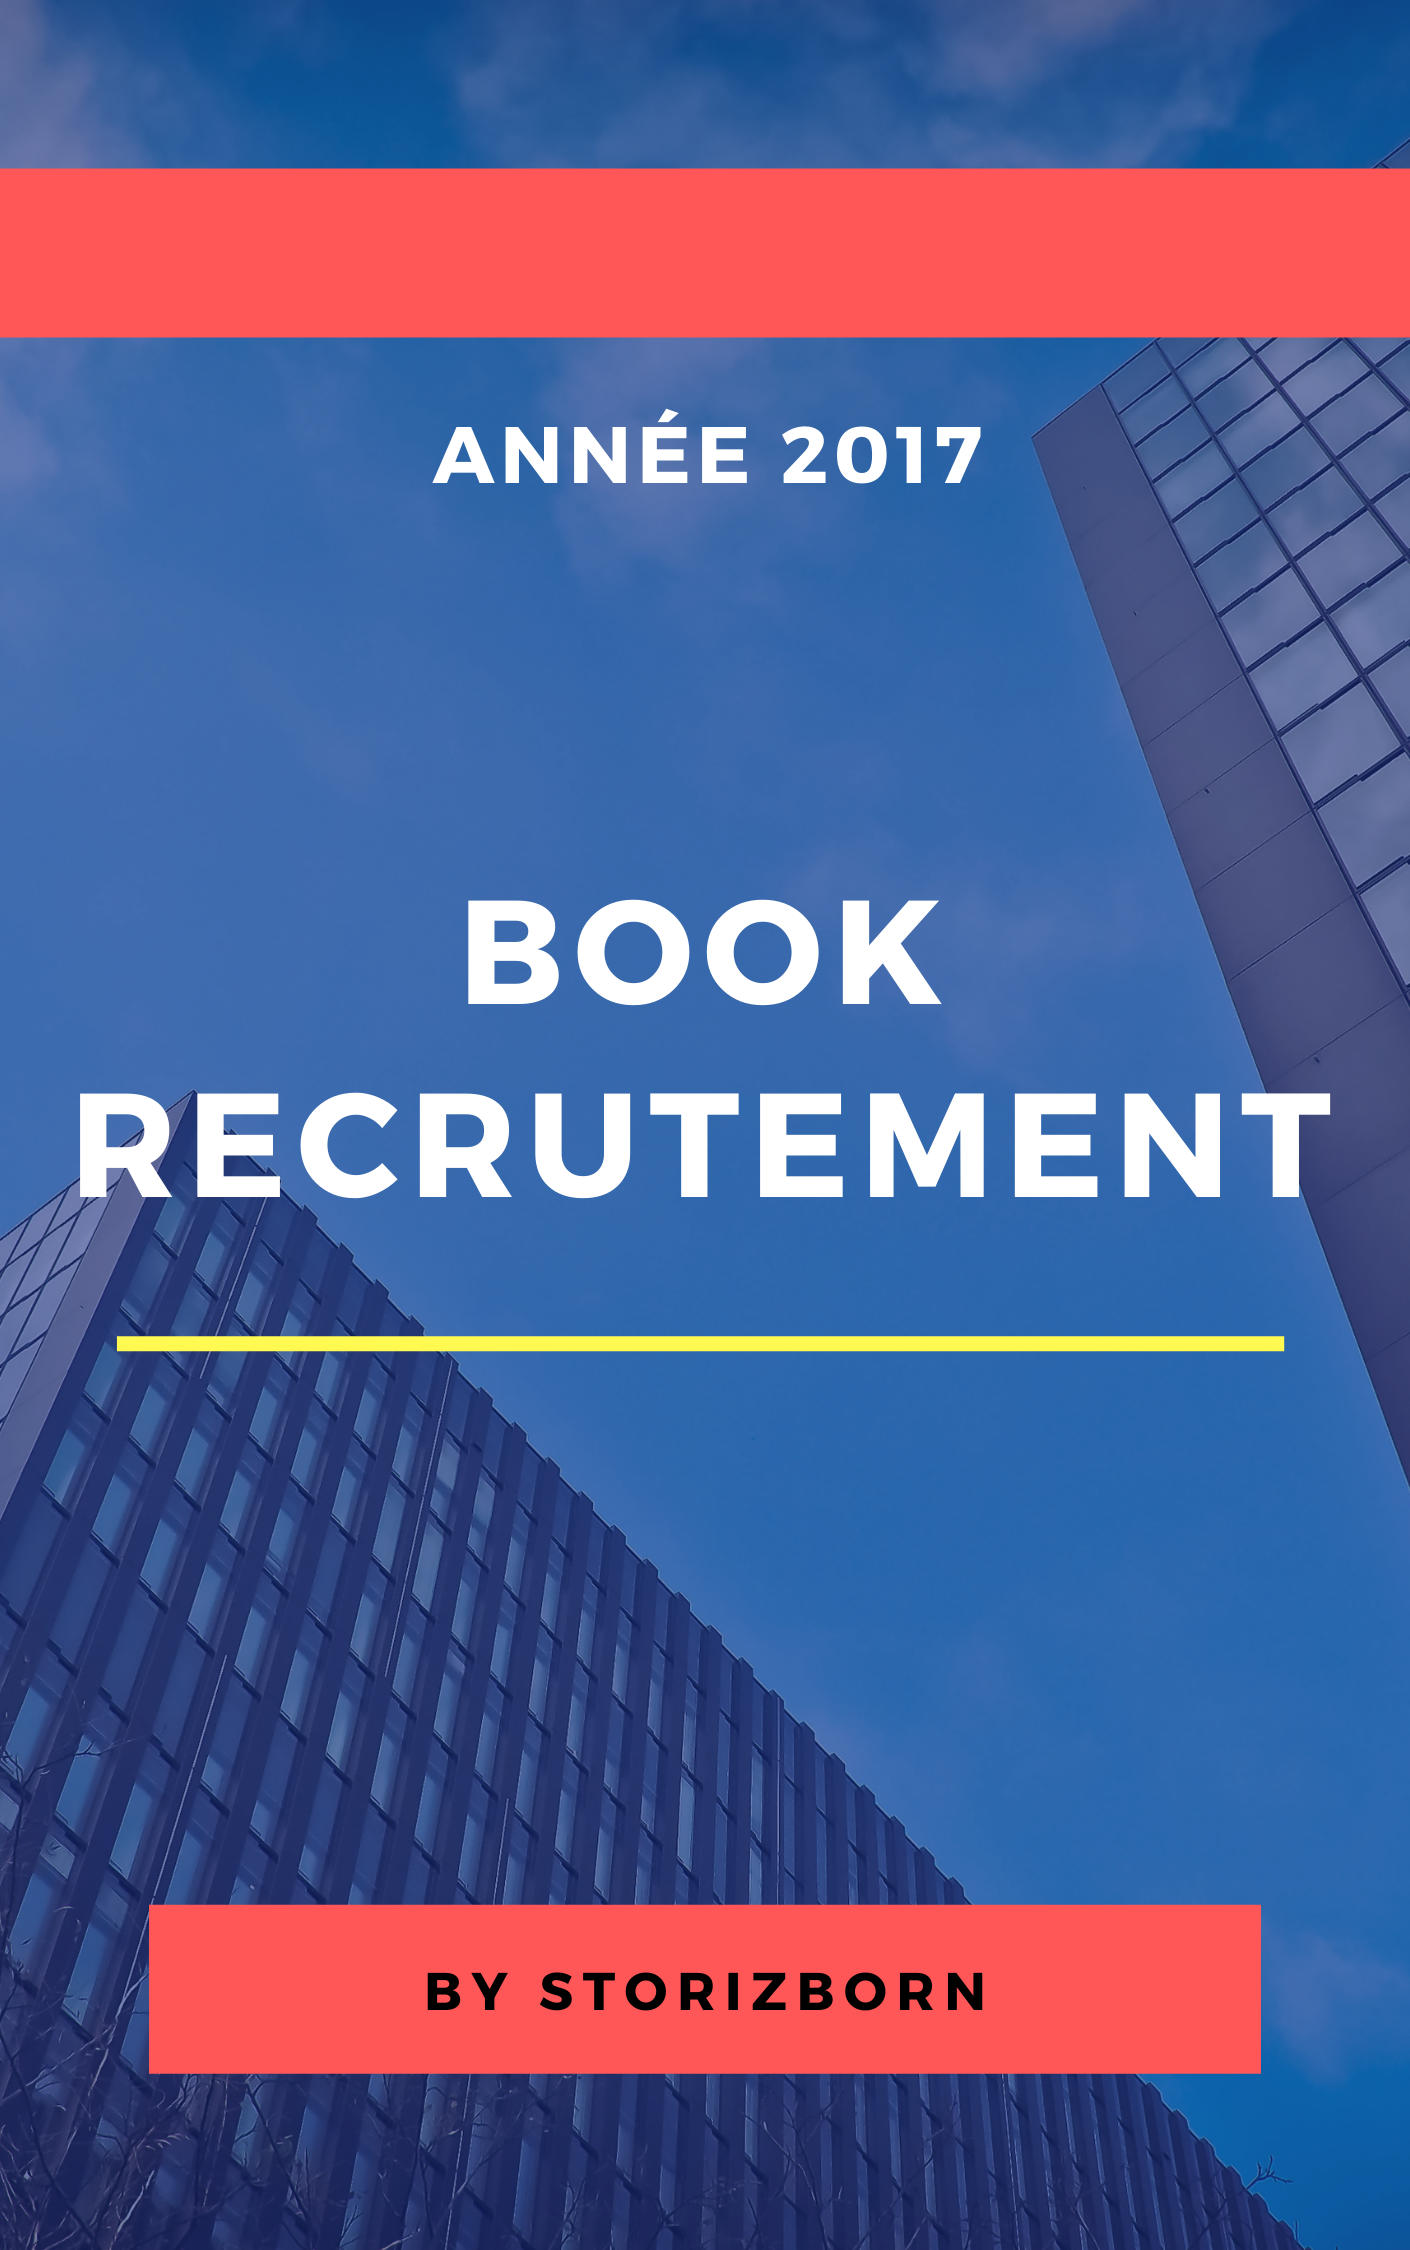 E-book recrutement 2017